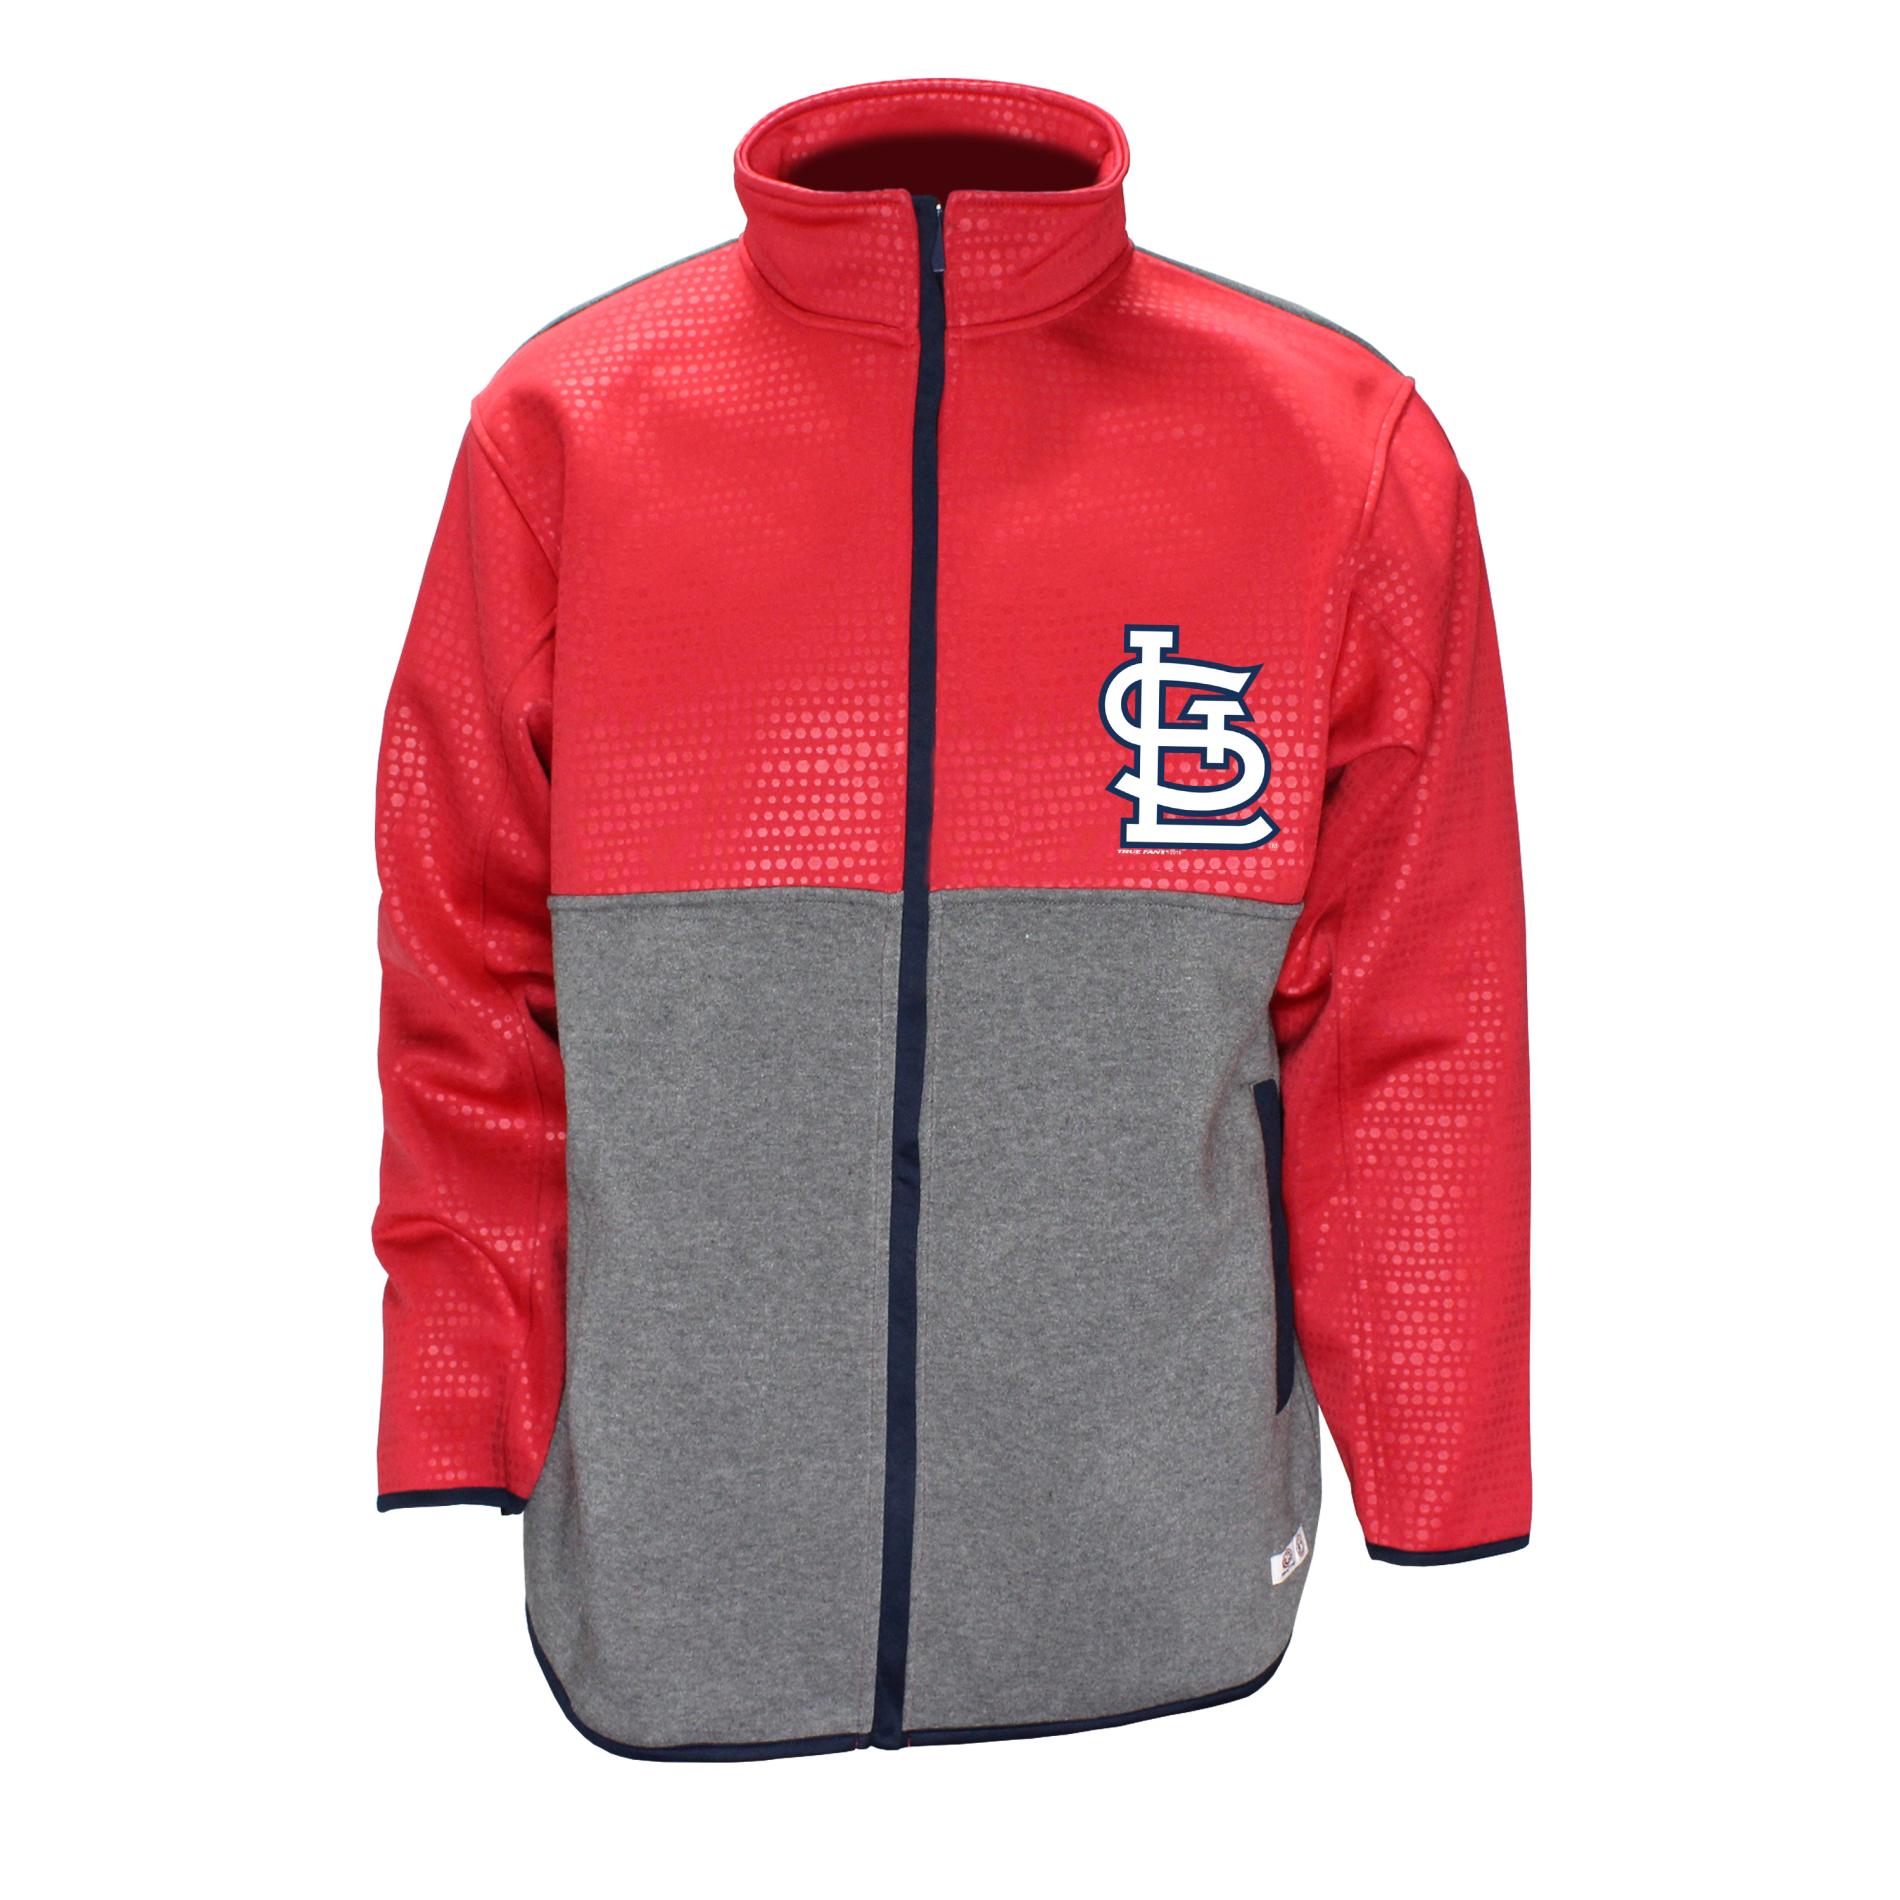 MLB Men's Athletic Jacket - St. Louis Cardinals